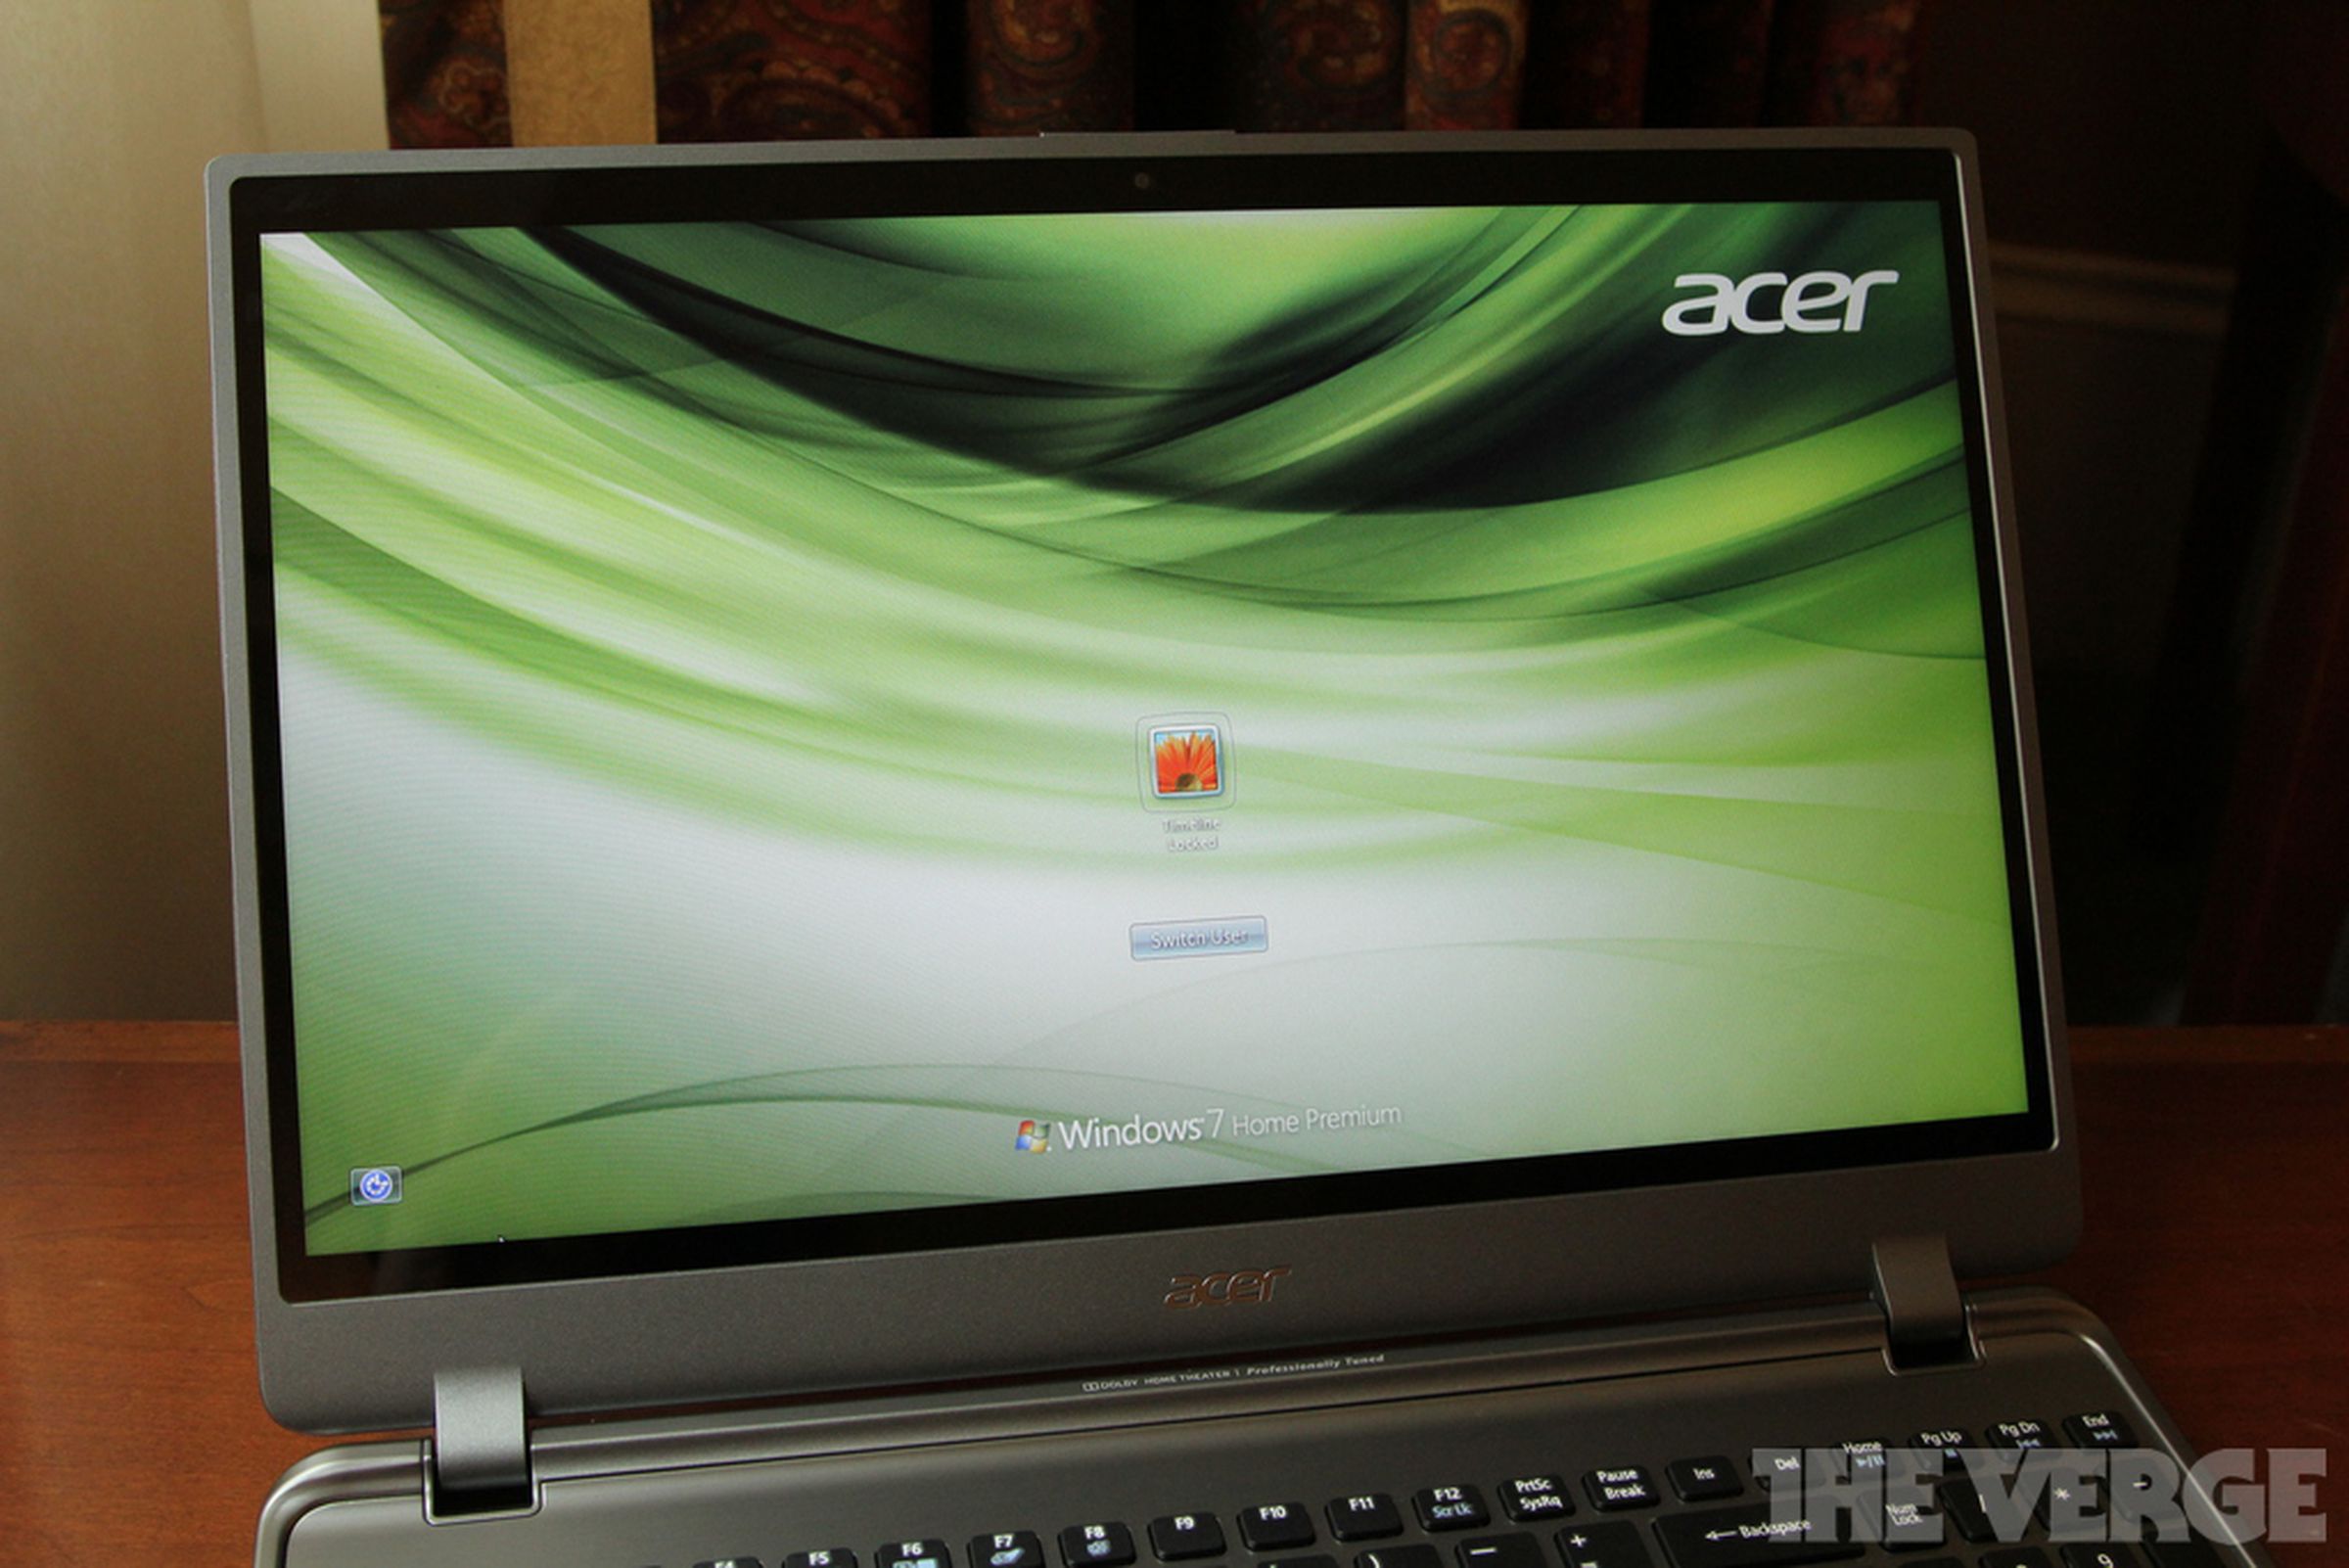 Acer Aspire Timeline Ultra M5 hands-on pictures